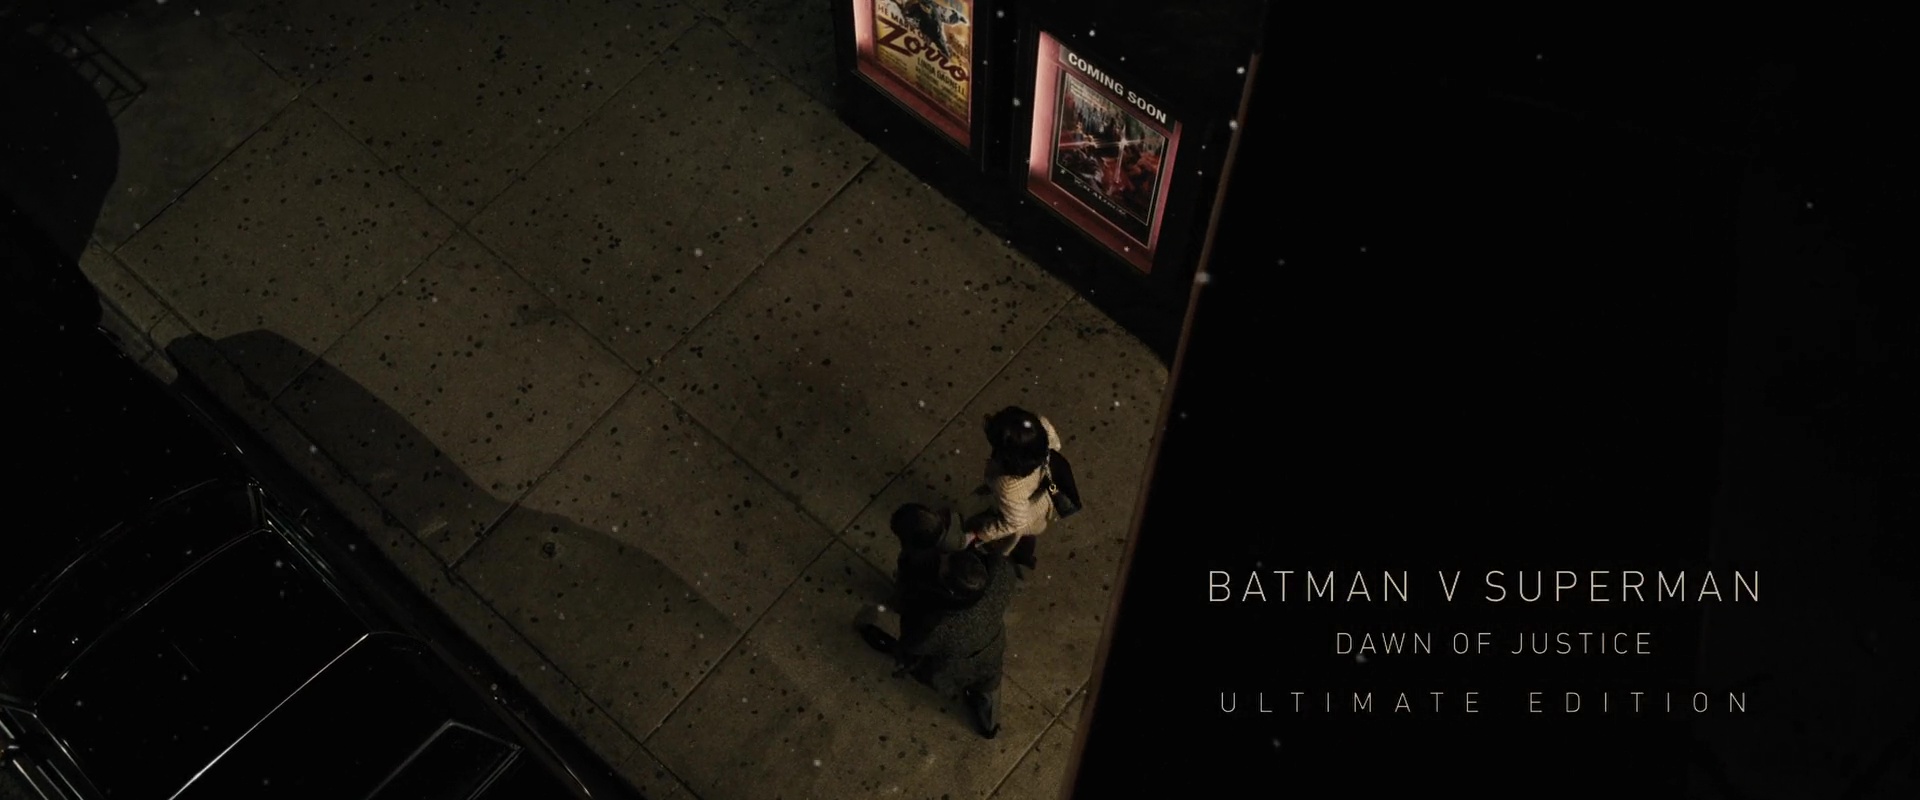 BATMAN V SUPERMAN : L’AUBE DE LA JUSTICE de Zack Snyder (2016)